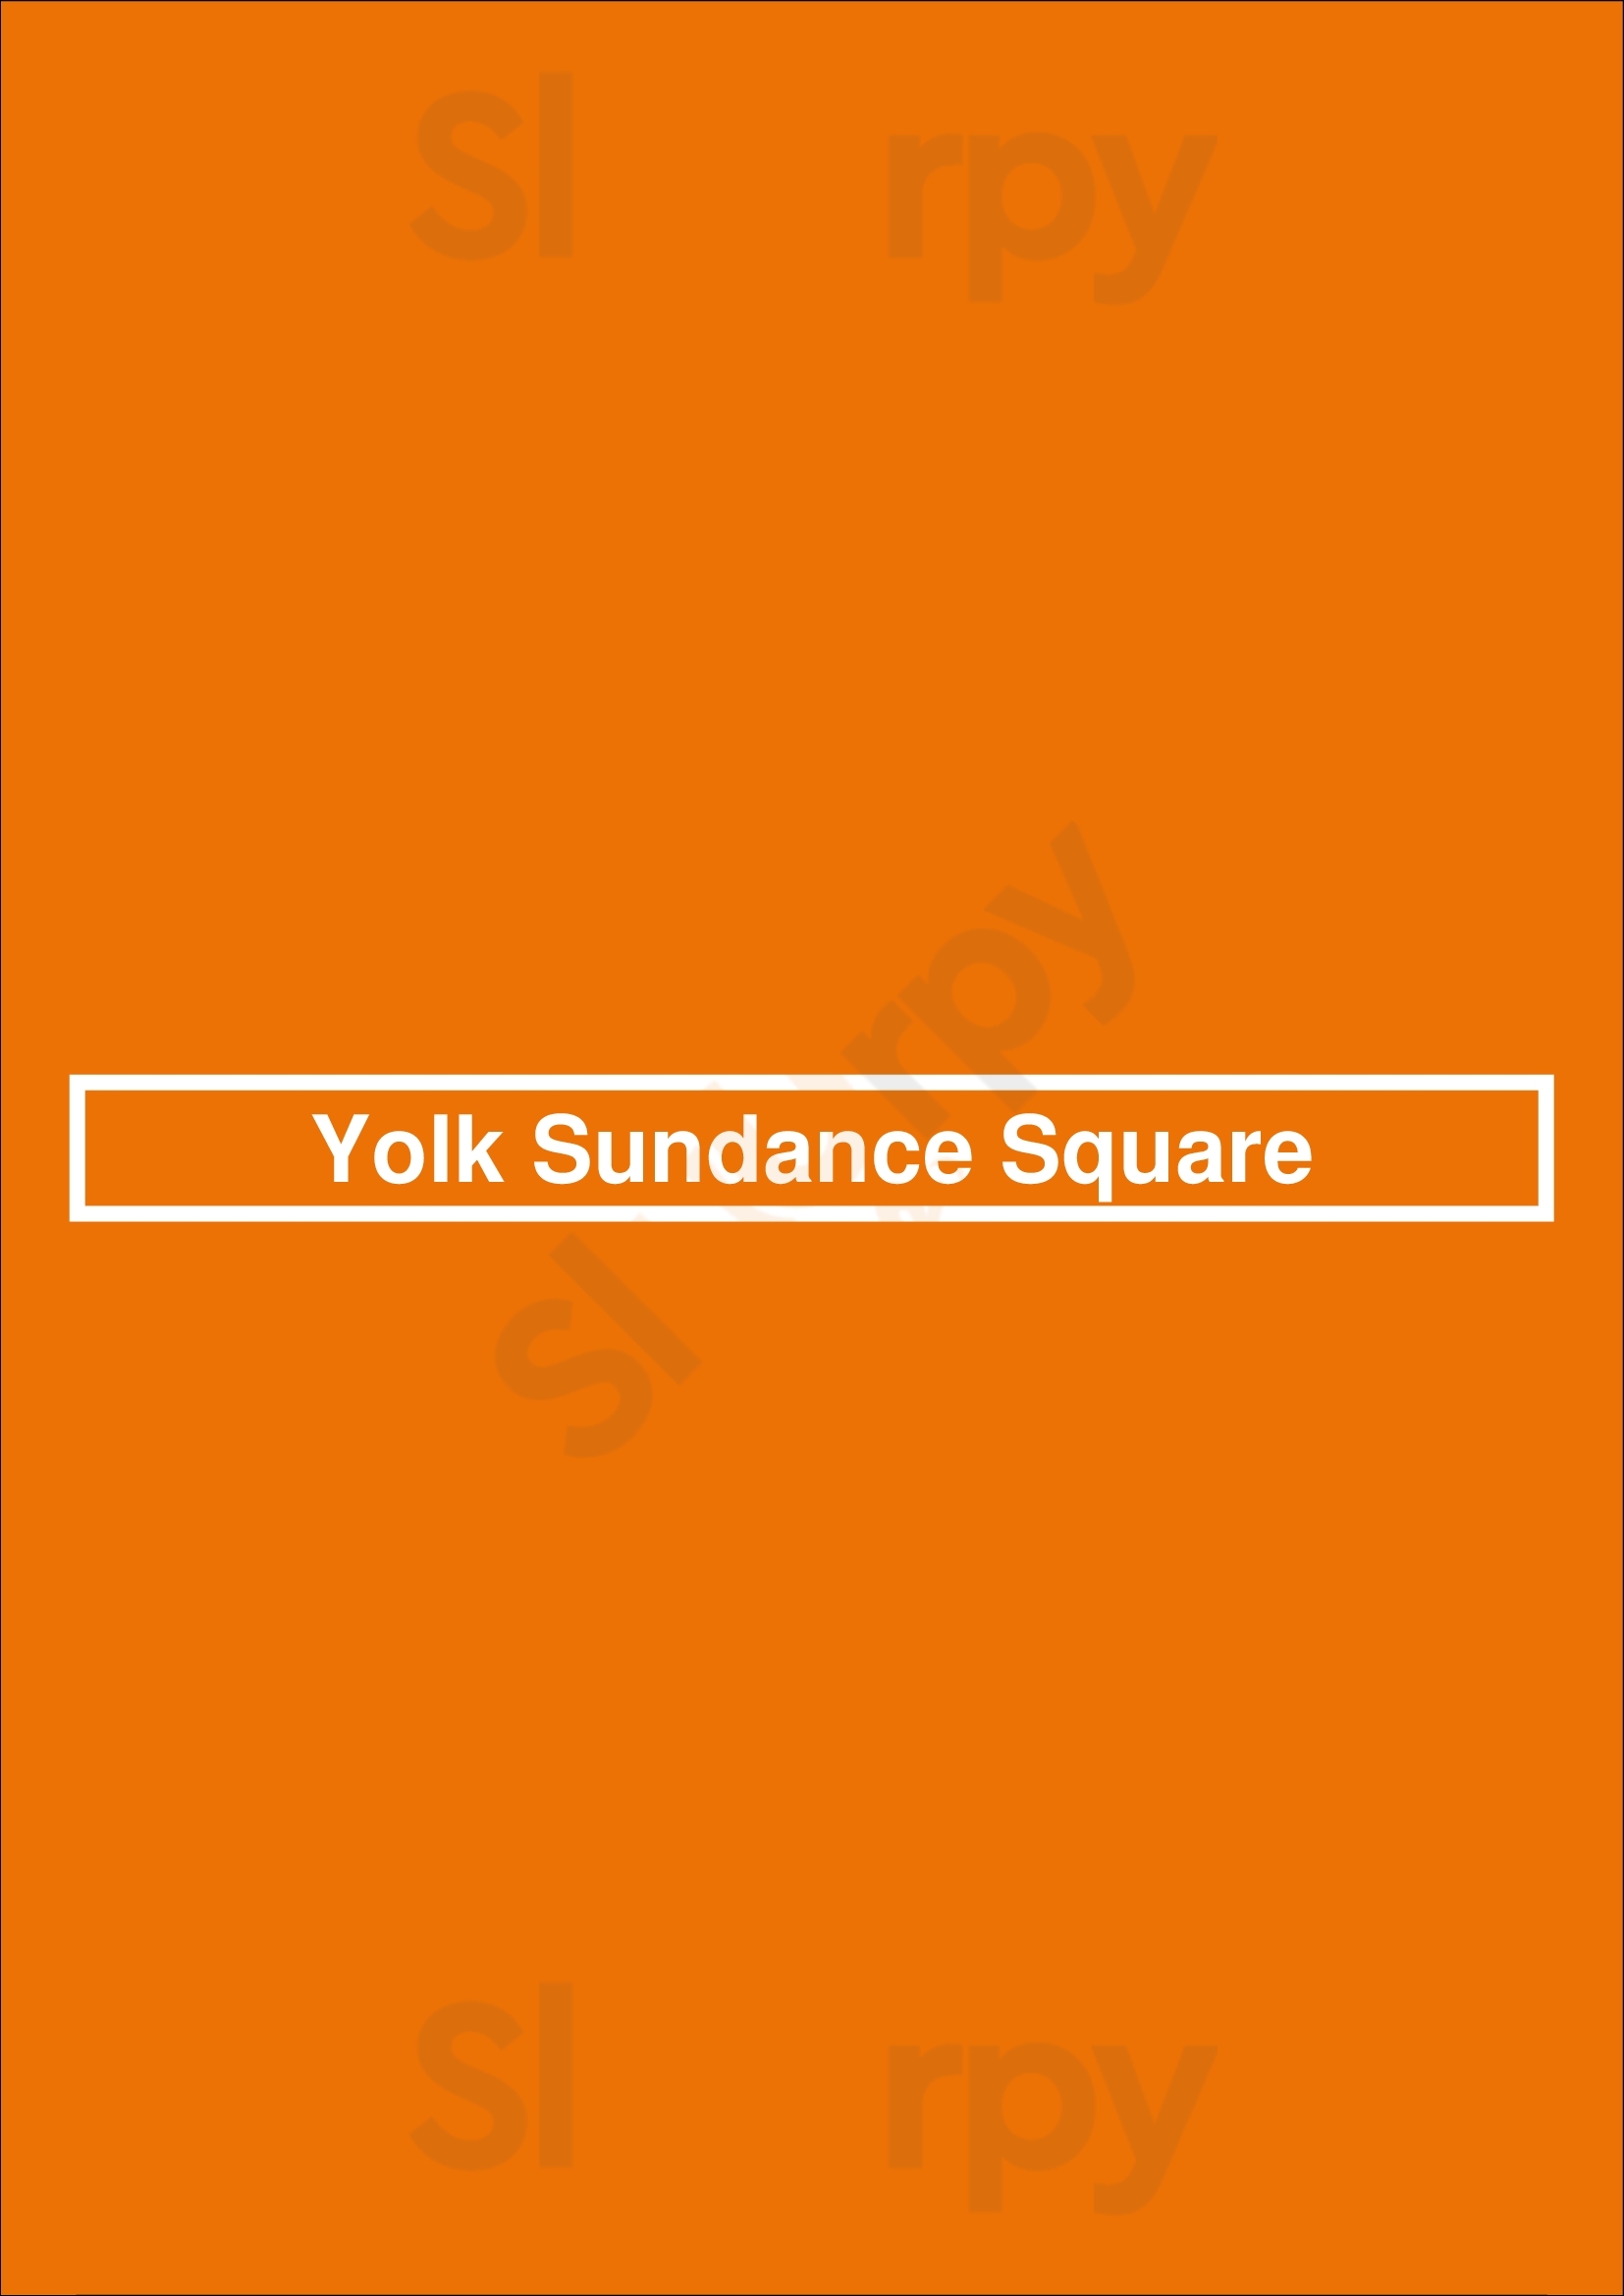 Yolk Sundance Square Fort Worth Menu - 1